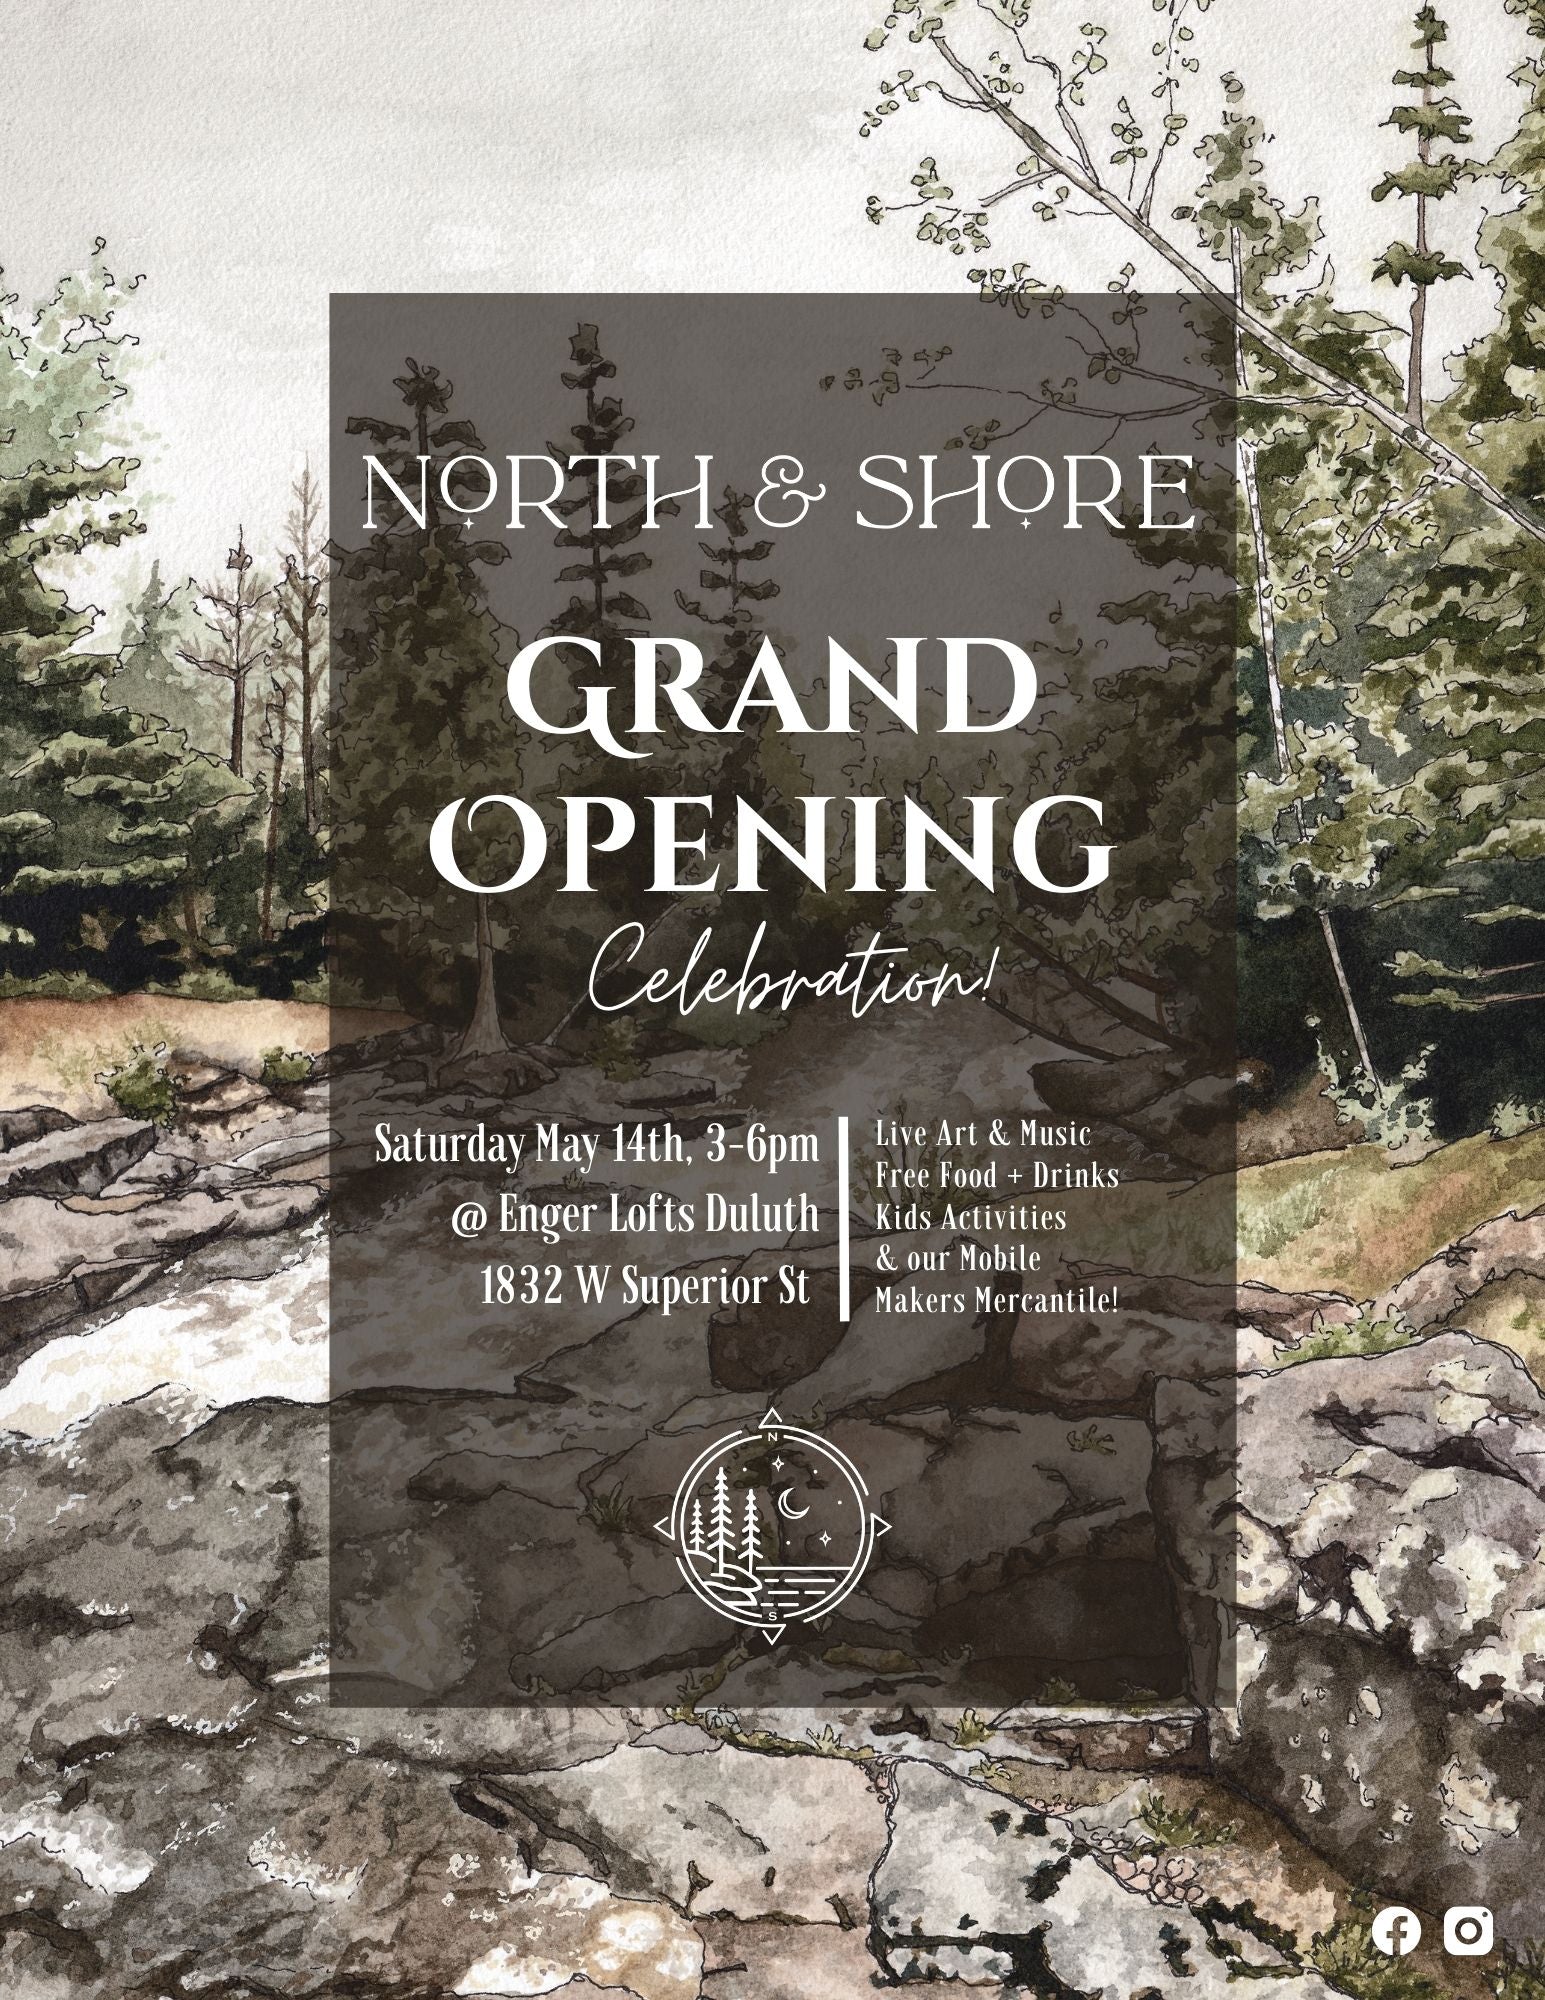 North & Shore Grand Opening!